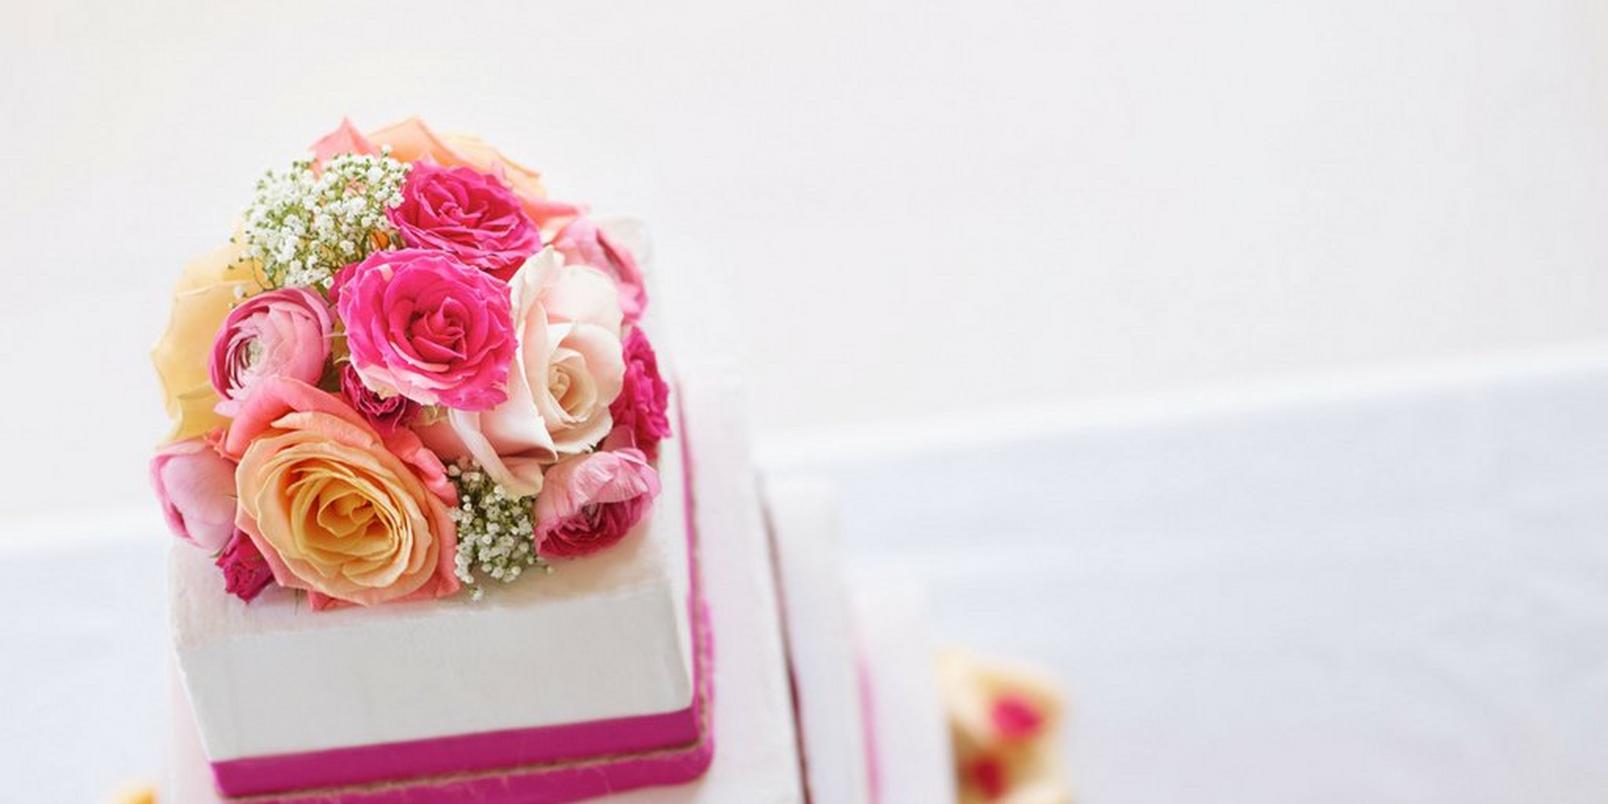 wedding-cake-real-flowers